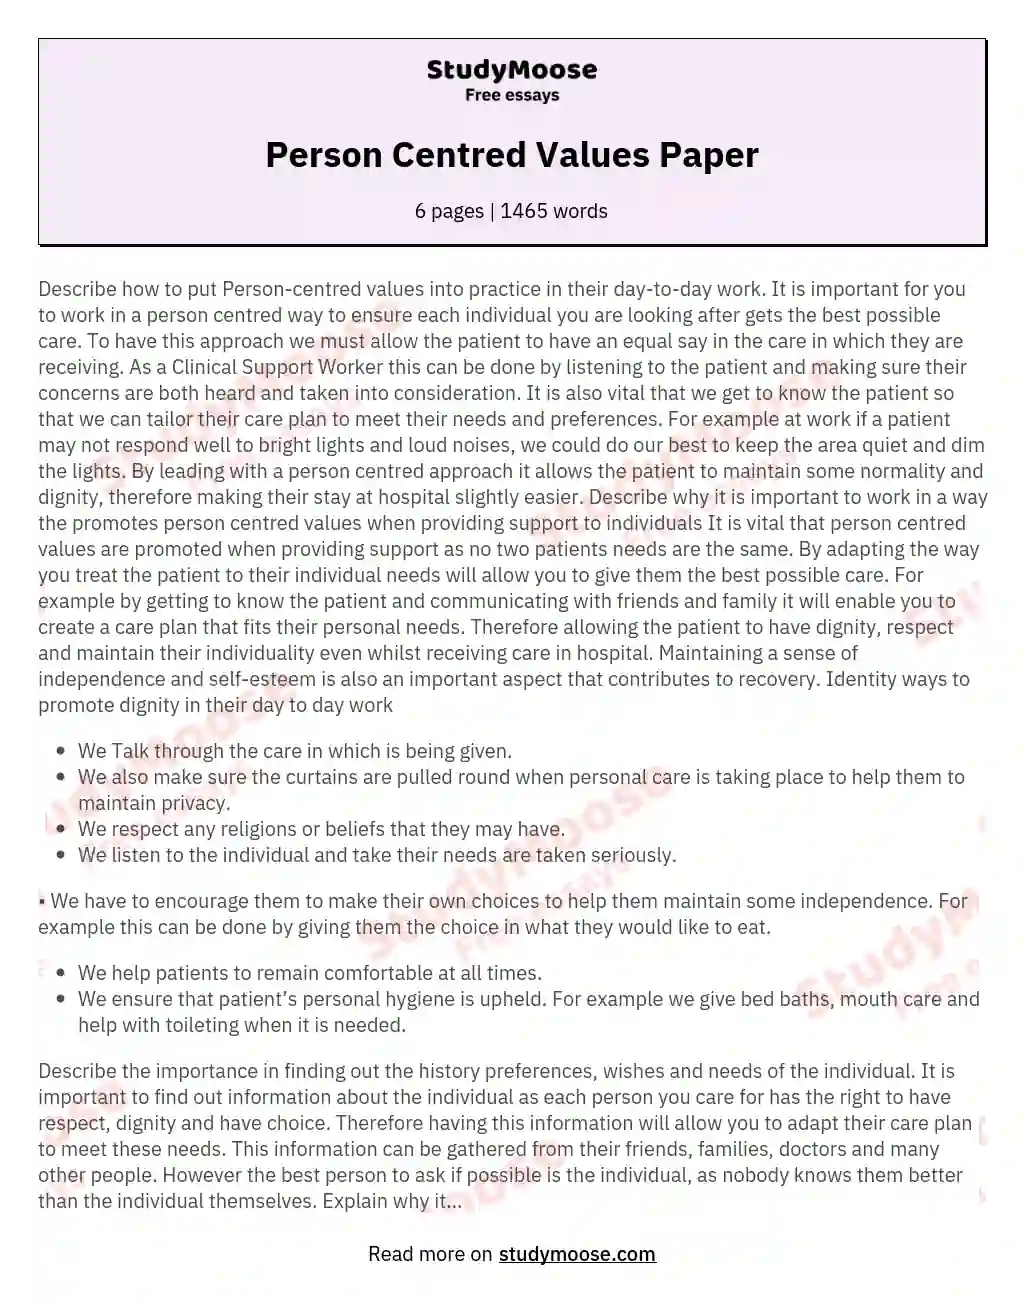 Person Centred Values Paper essay